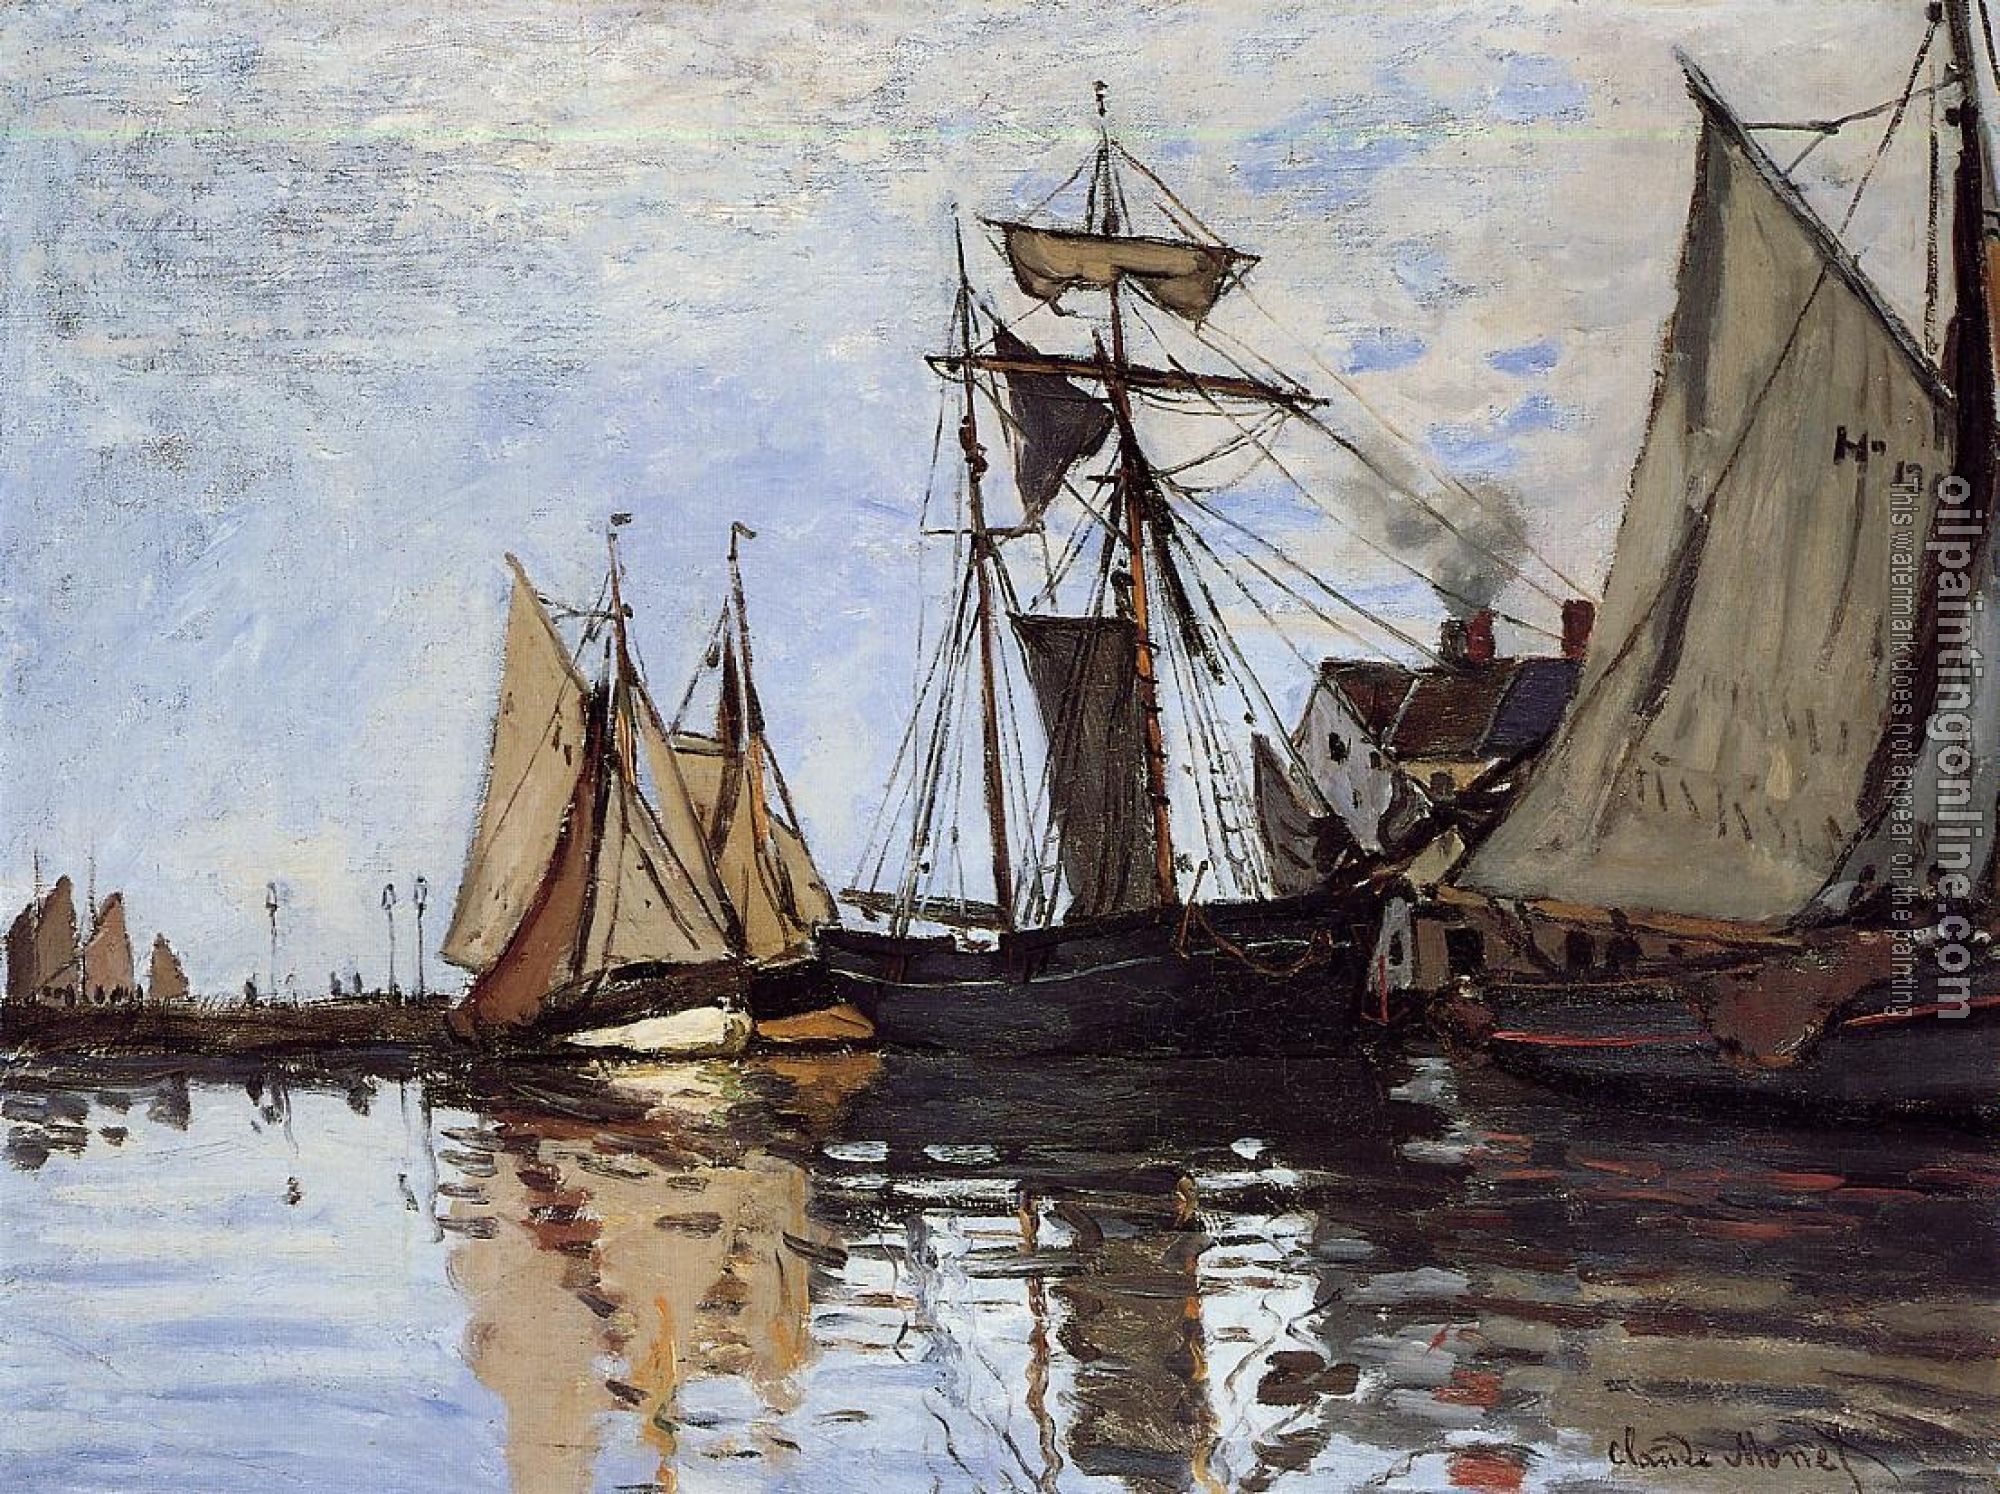 Monet, Claude Oscar - Boats in the Port of Honfleur